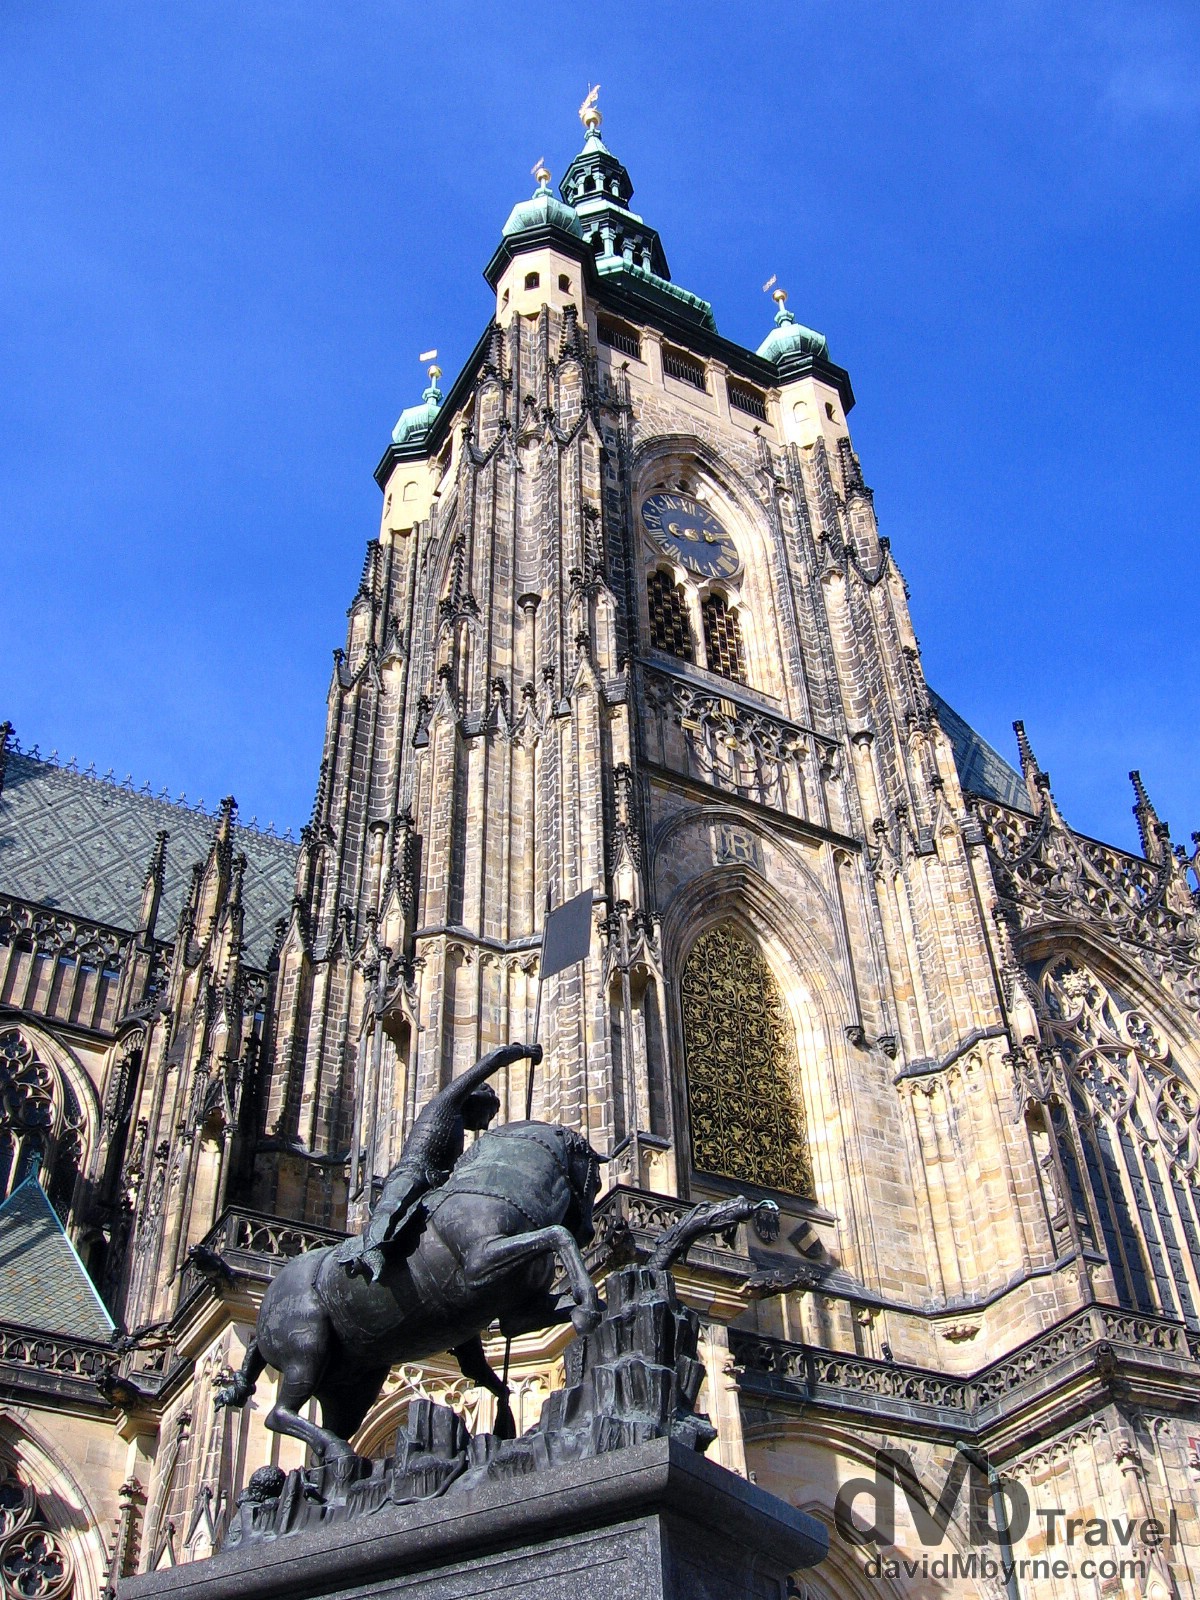 Saint Vitus Cathedral in the grounds of Prague Castle, Prague, Czech Republic. March 8, 2006.